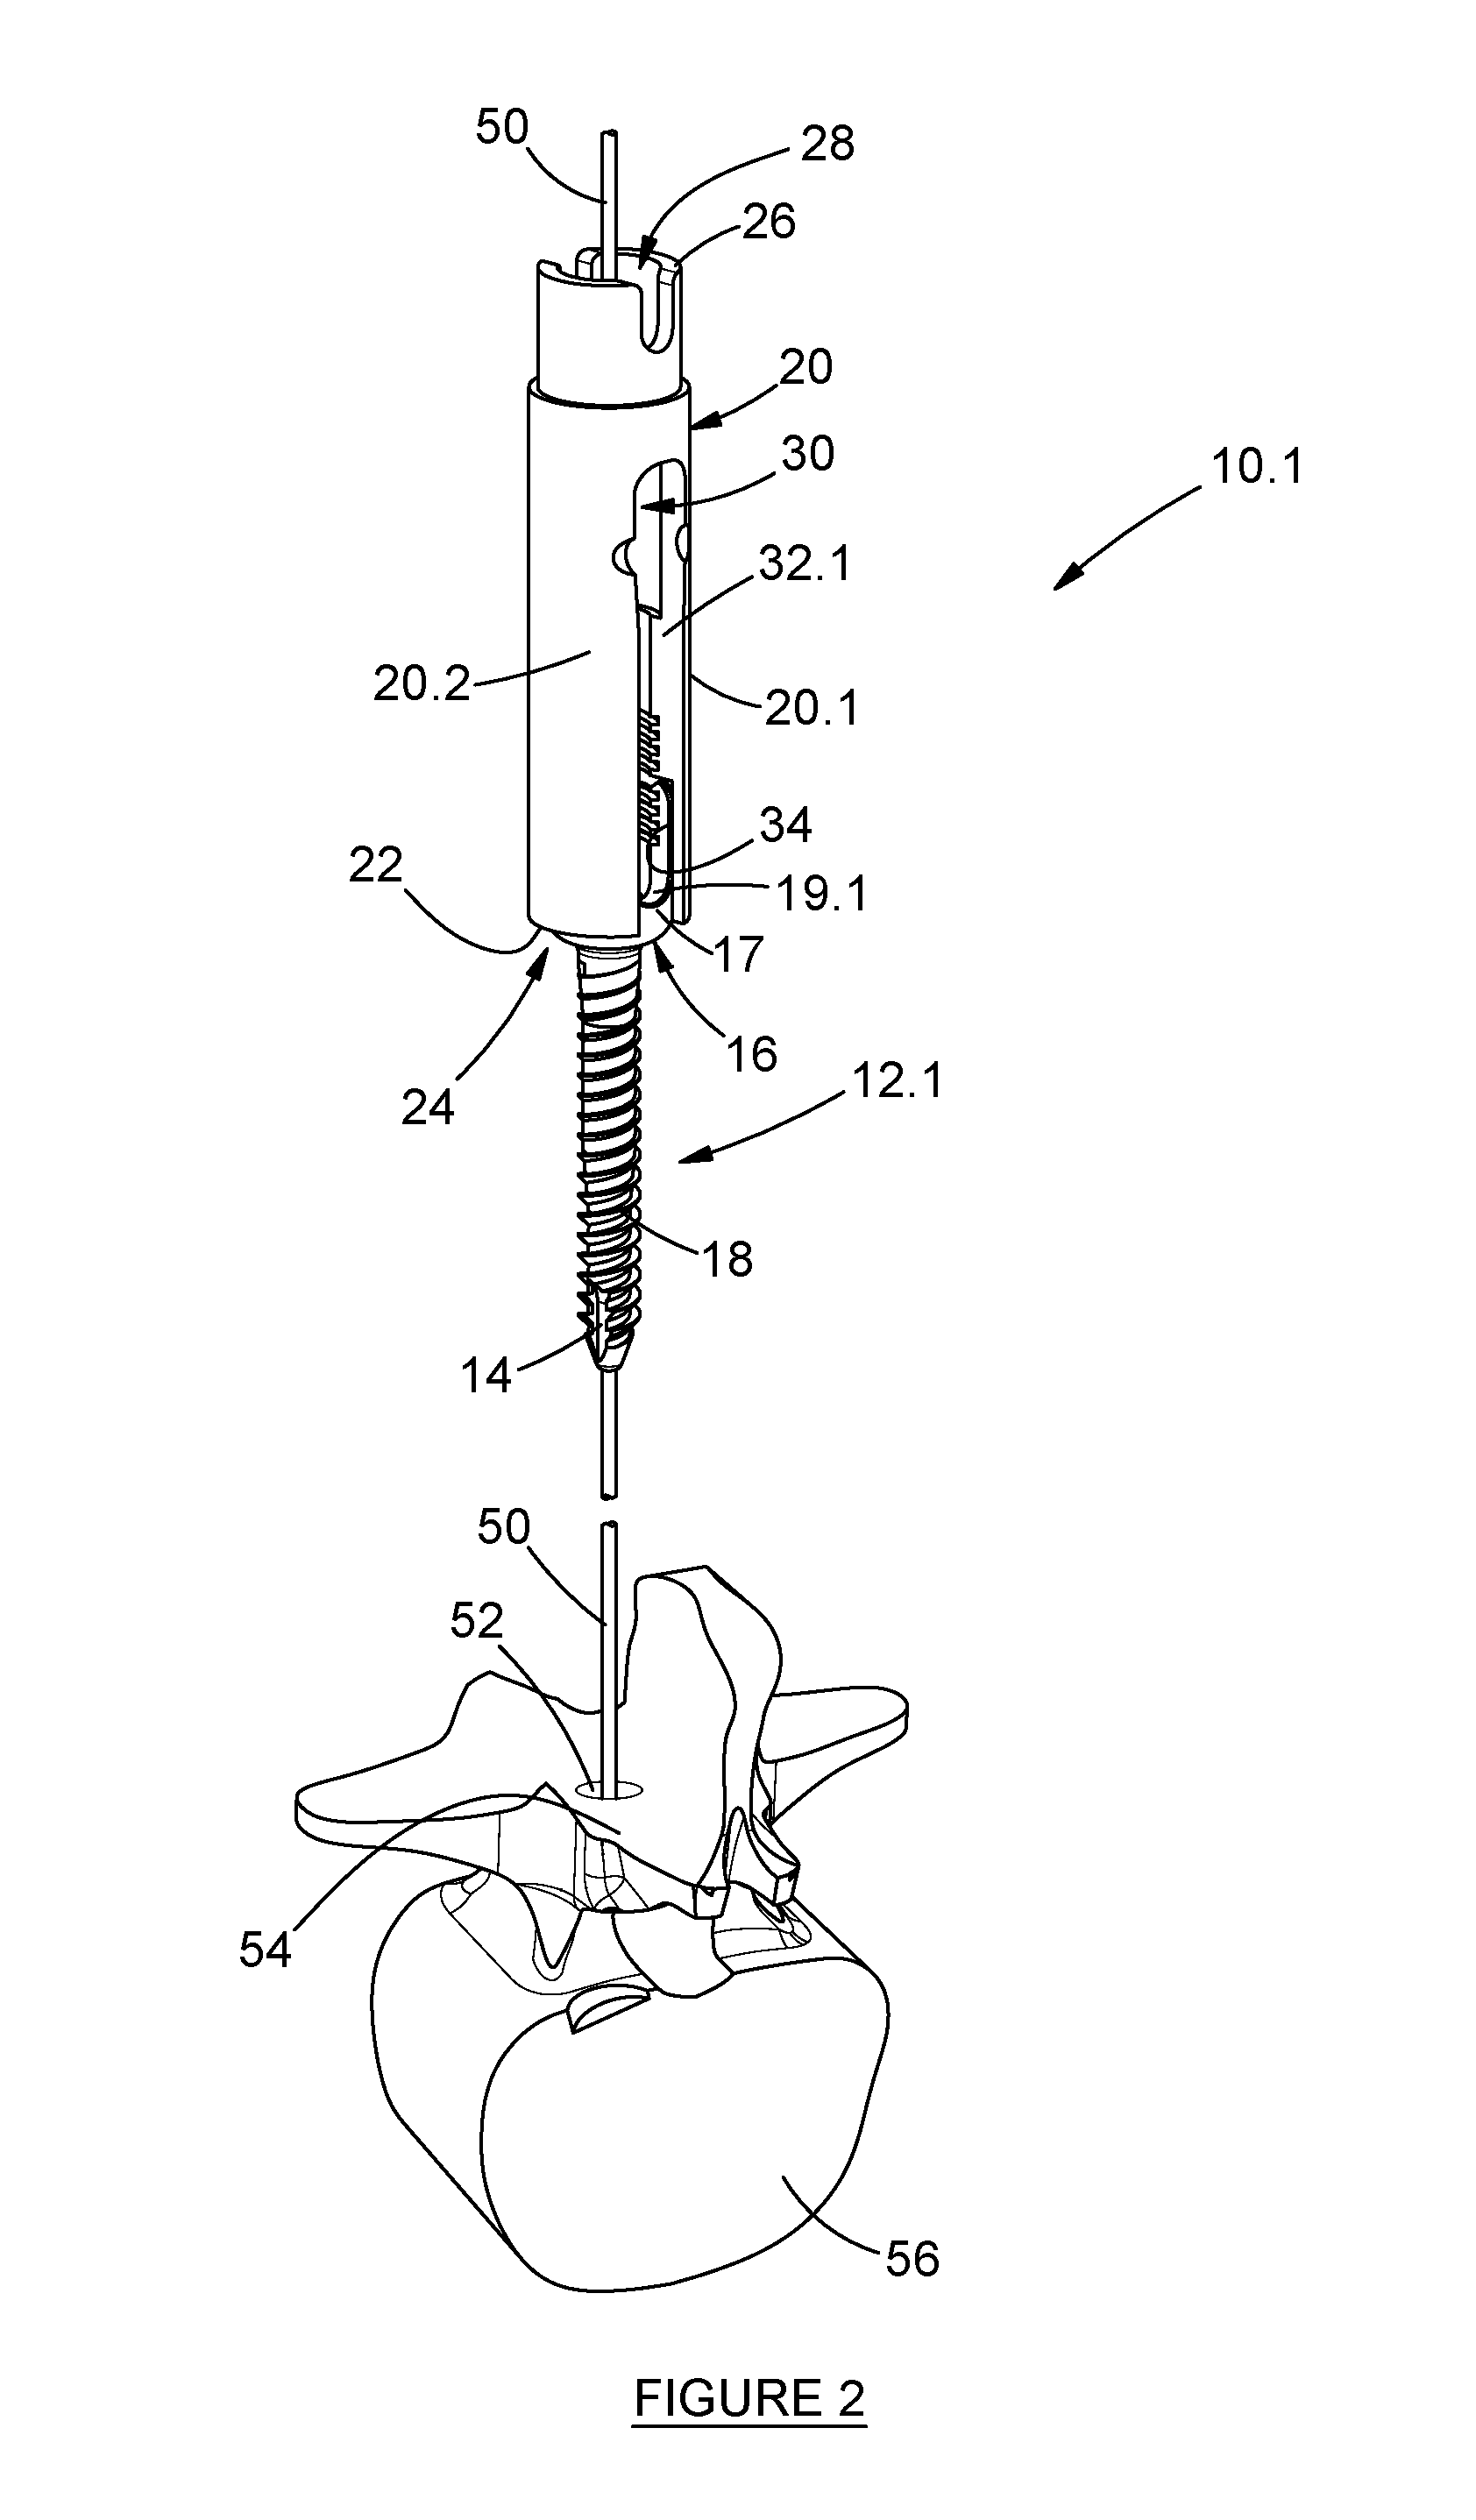 Pedicle mountable retractor system